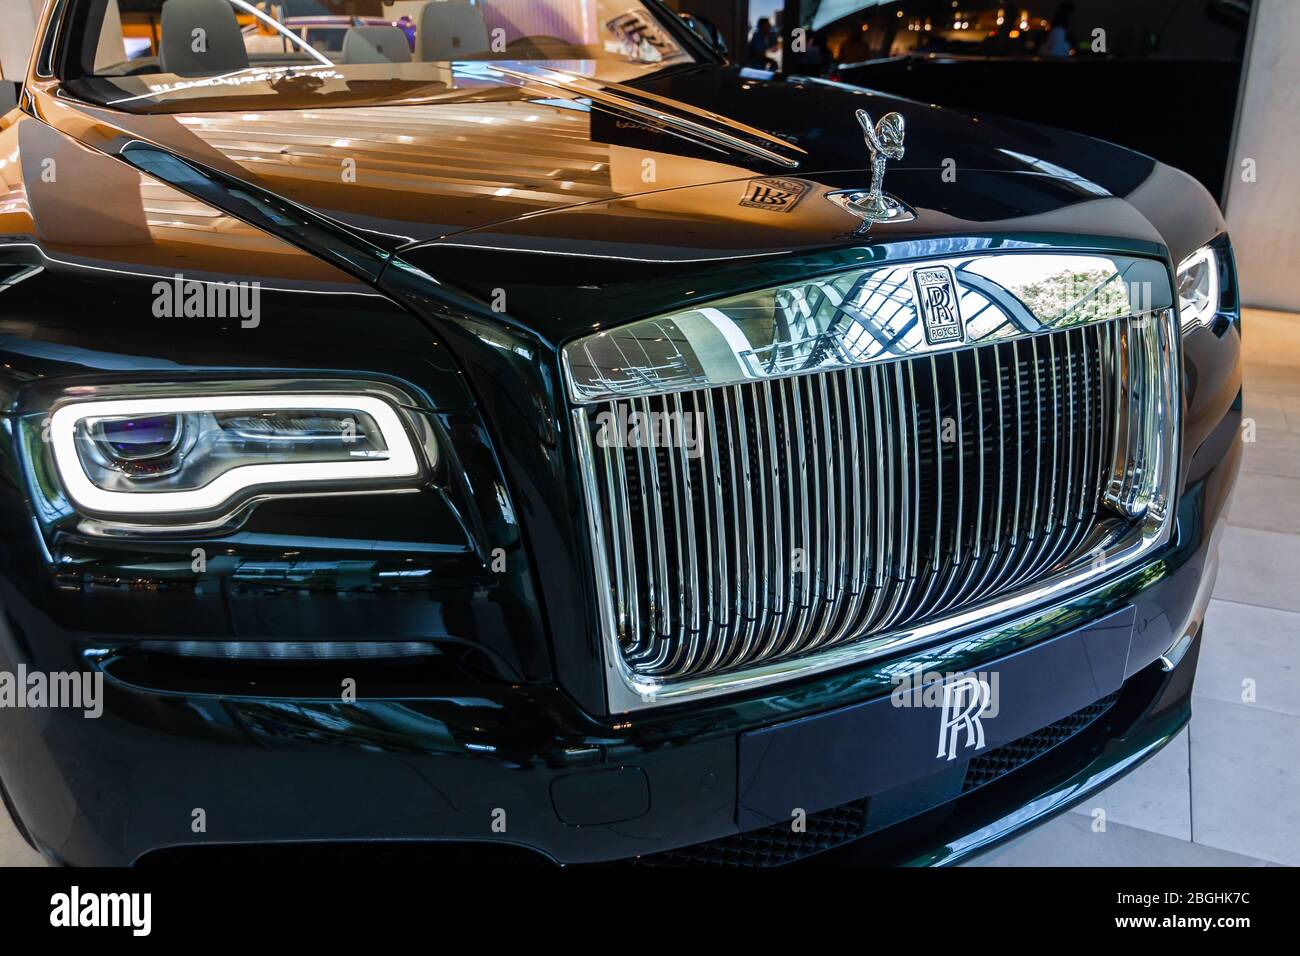 Rolls Royce phantom.BMW Welt, Munich, Germany, March 2020 Stock Photo